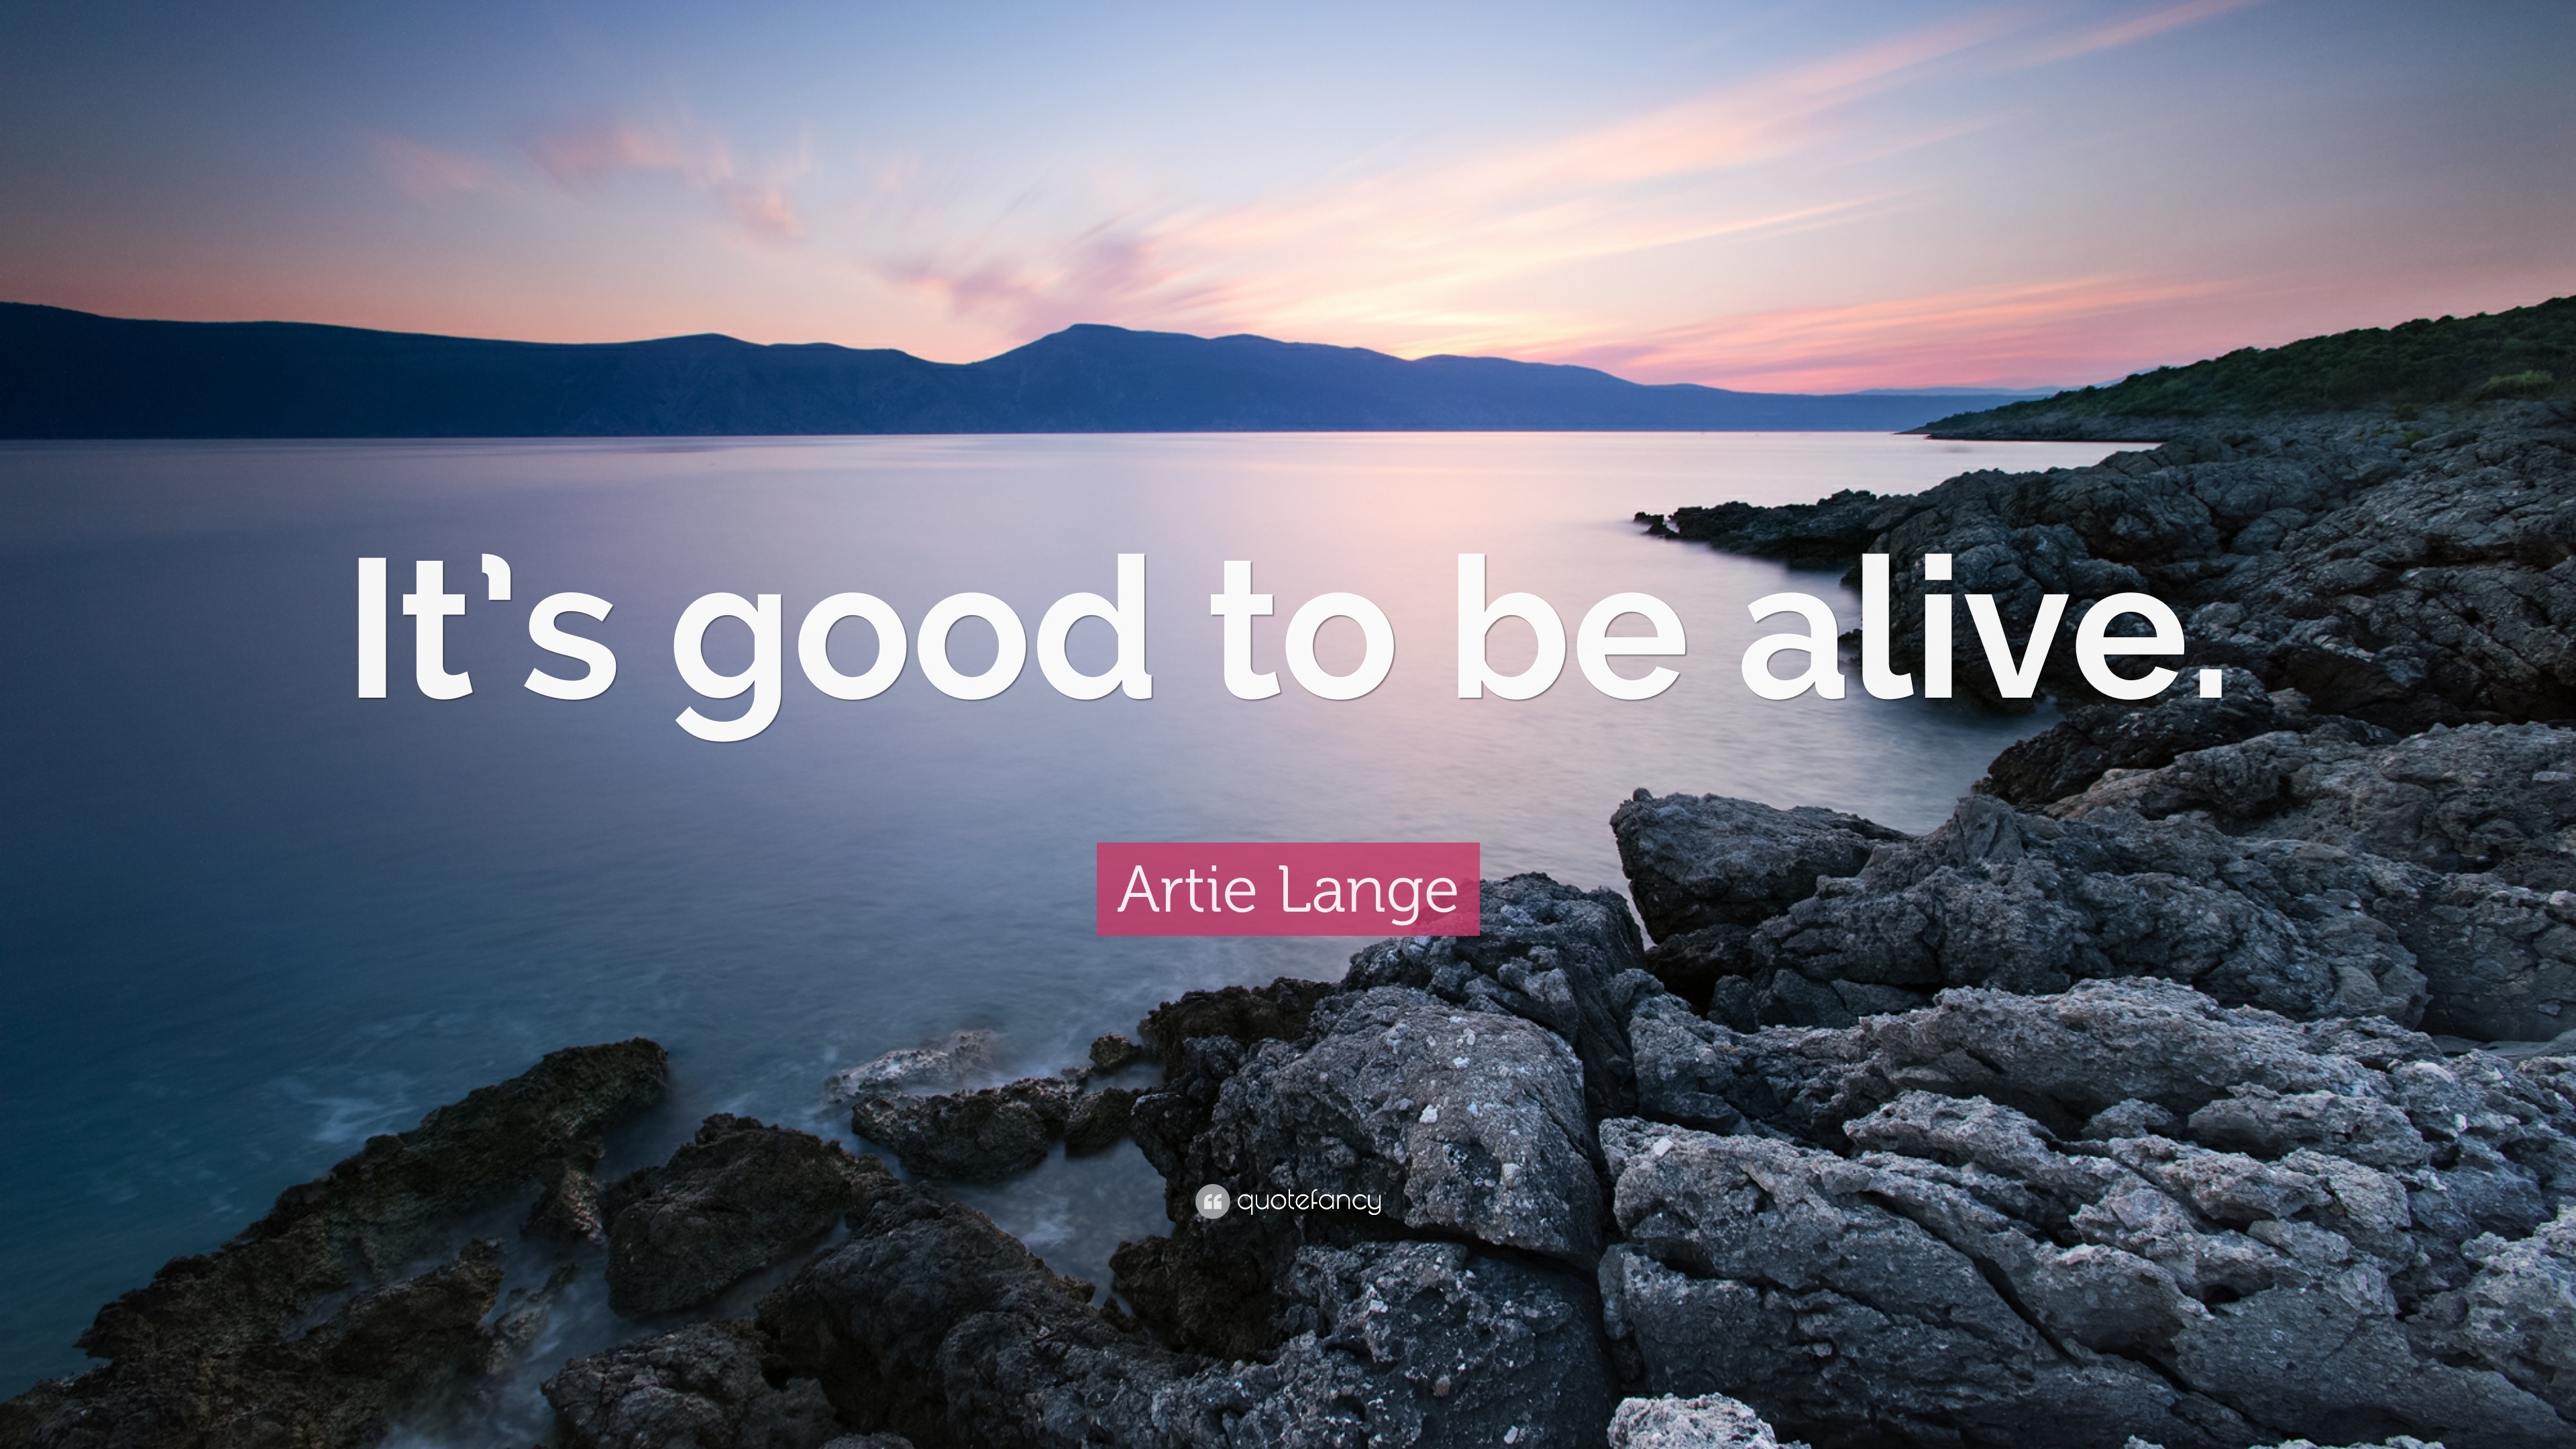 Artie Lange Quote: “It's good to be alive.”